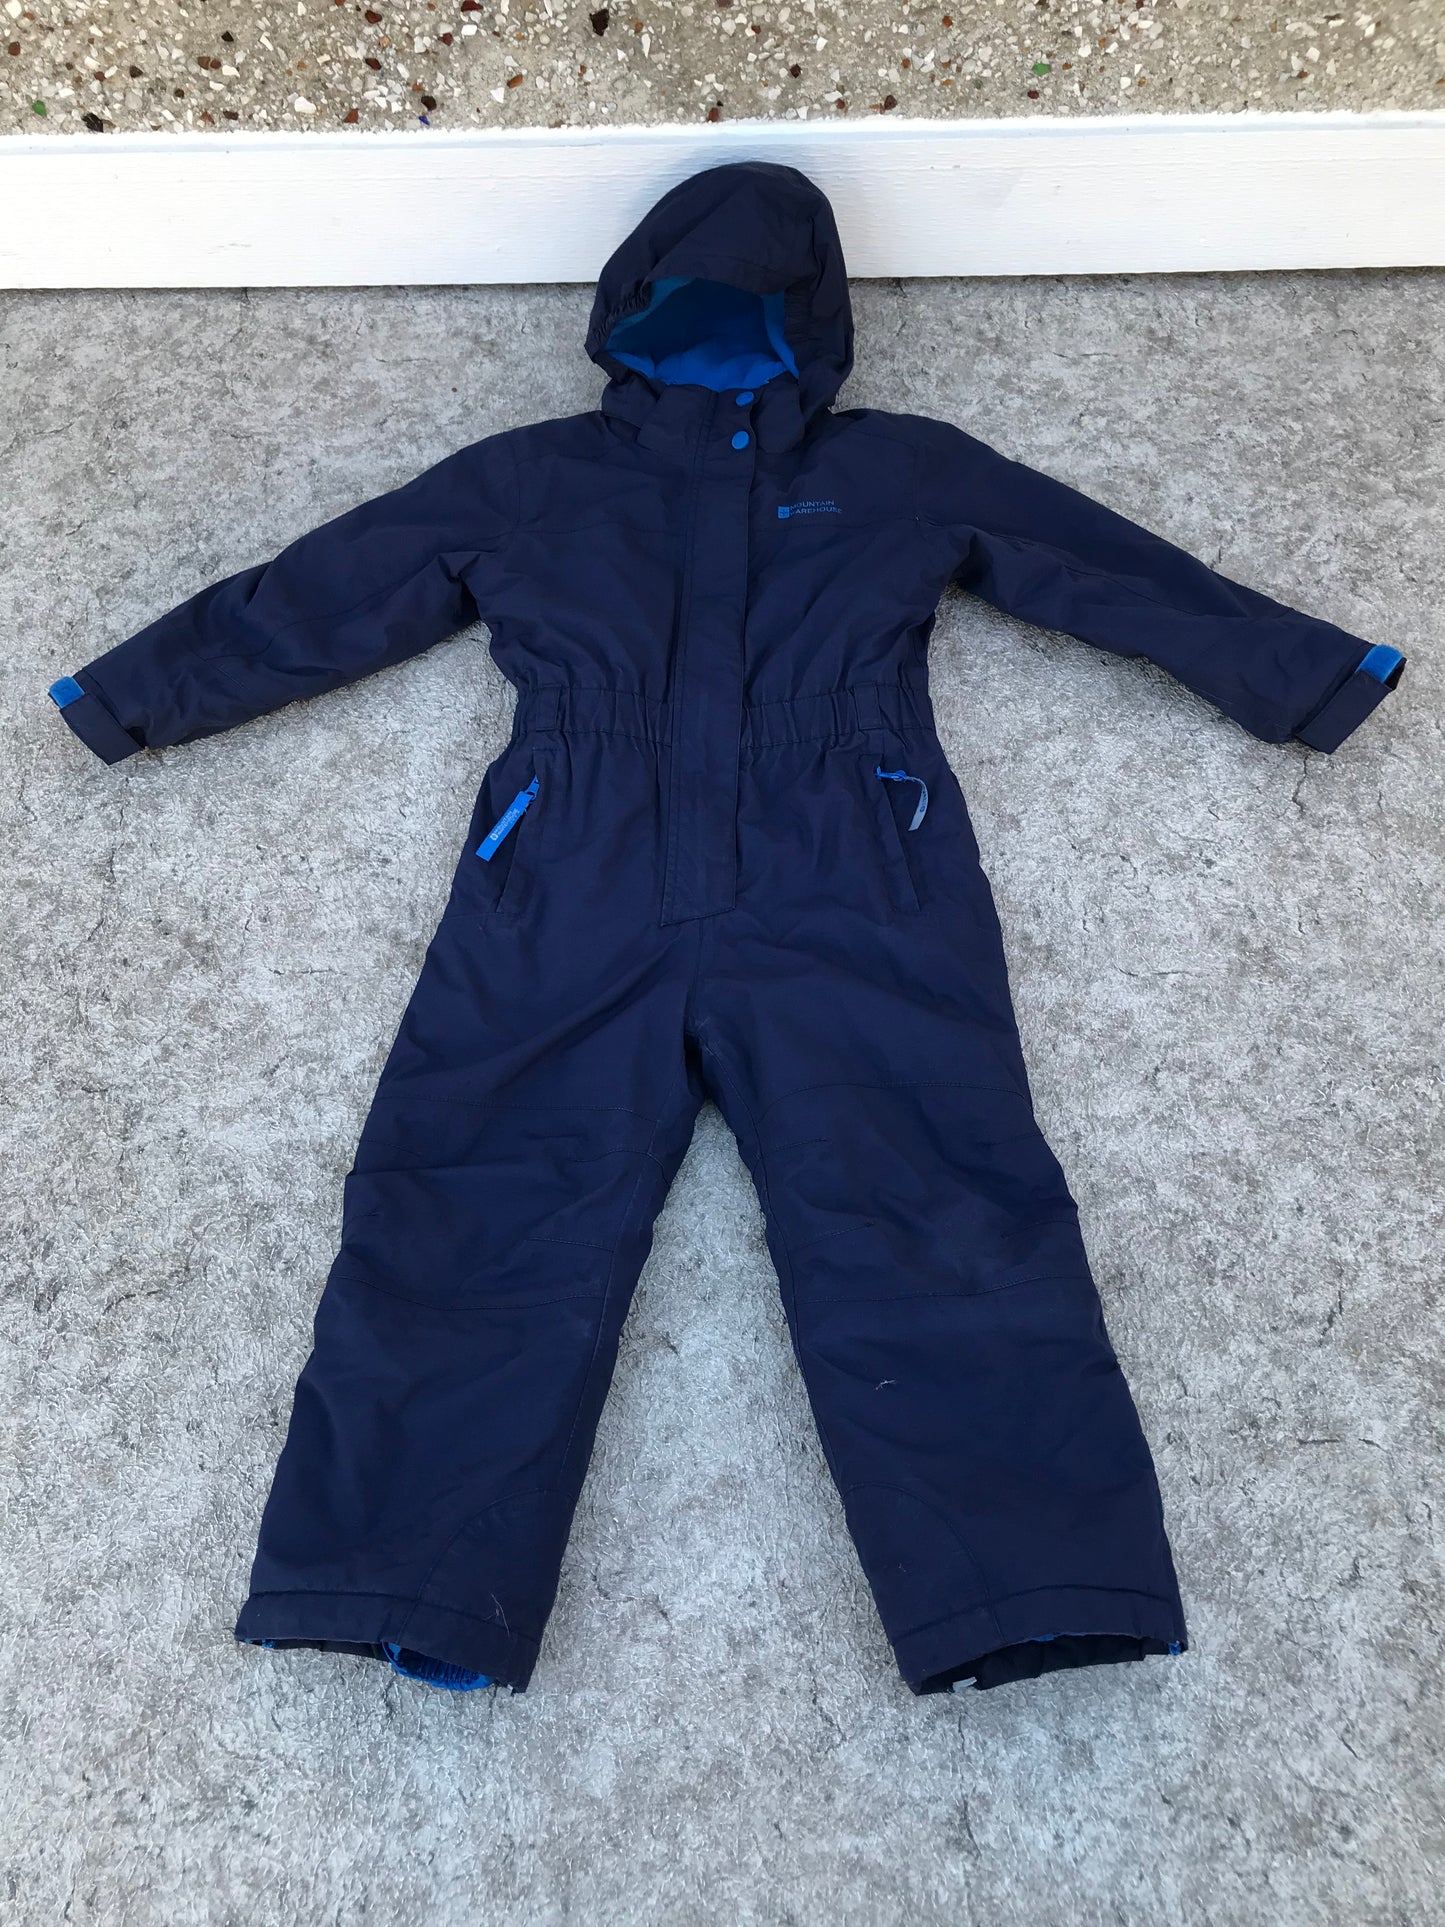 Snowsuit Child Size 5-6 Mt Warehouse Dark Blue Wth Blue Micro Fleece Lined